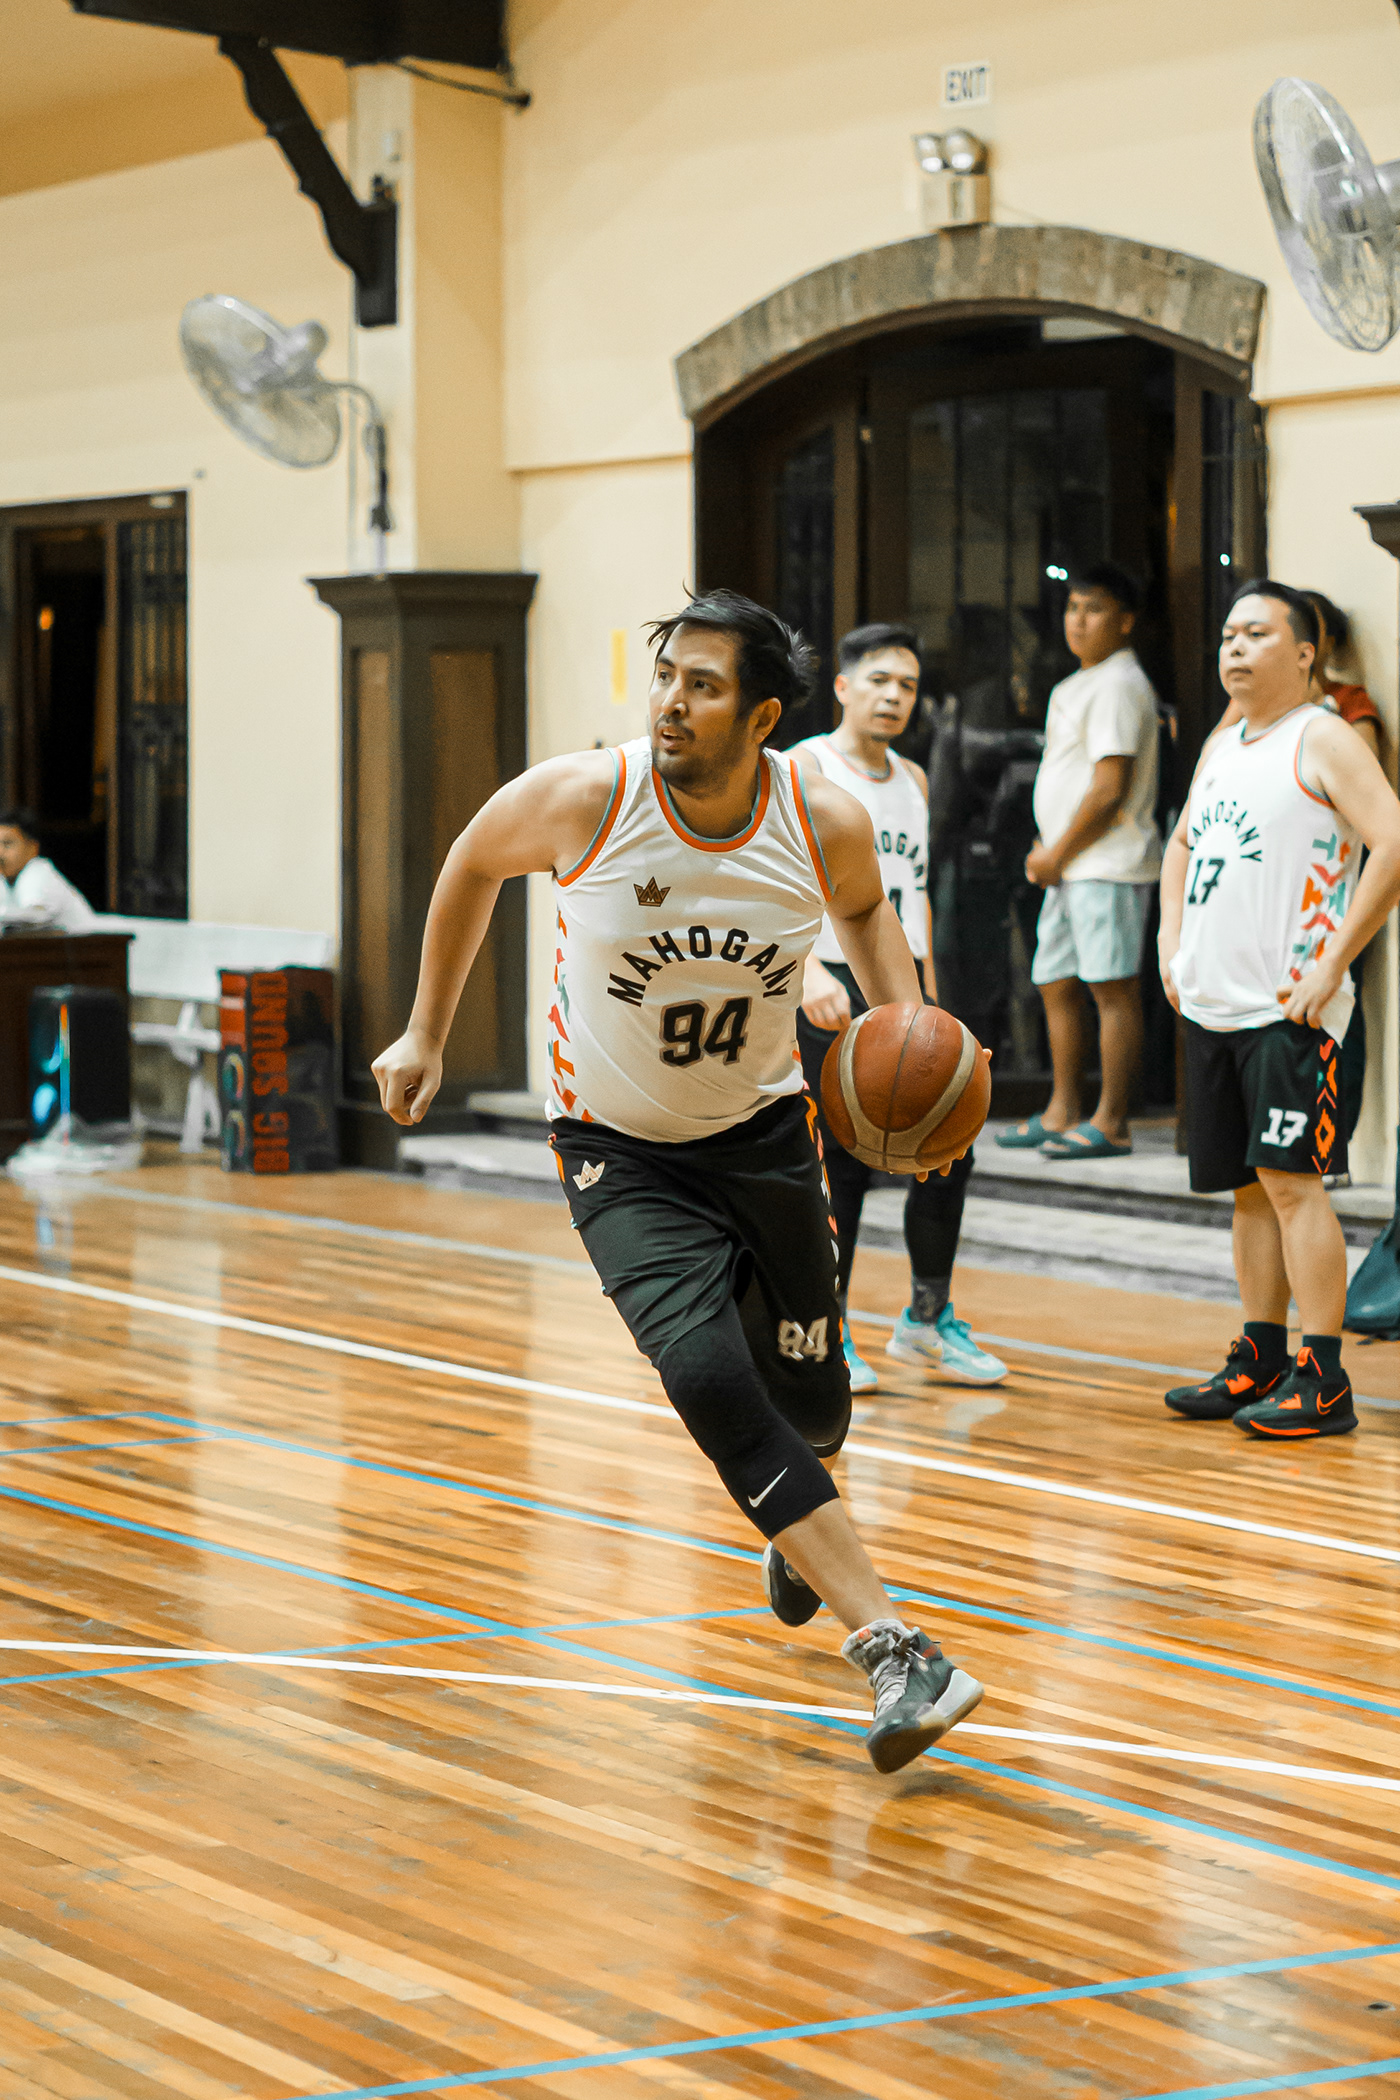 basketball philippines mahogany basketballleague